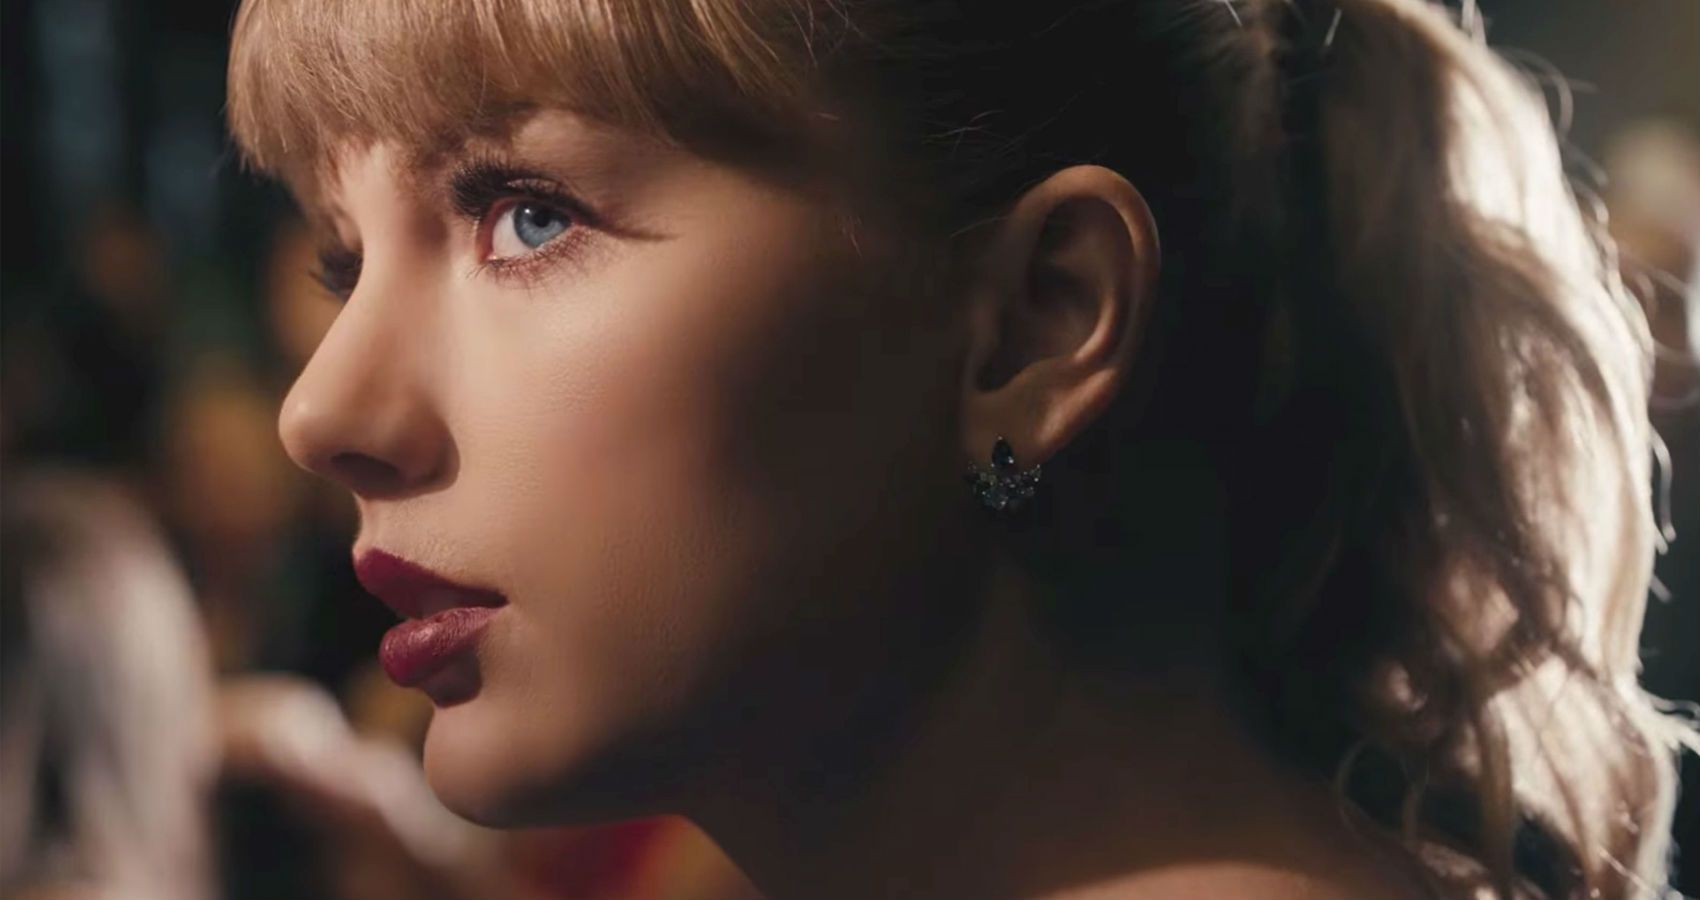 Os fãs reagem ao vídeo musical delicado de Taylor Swift